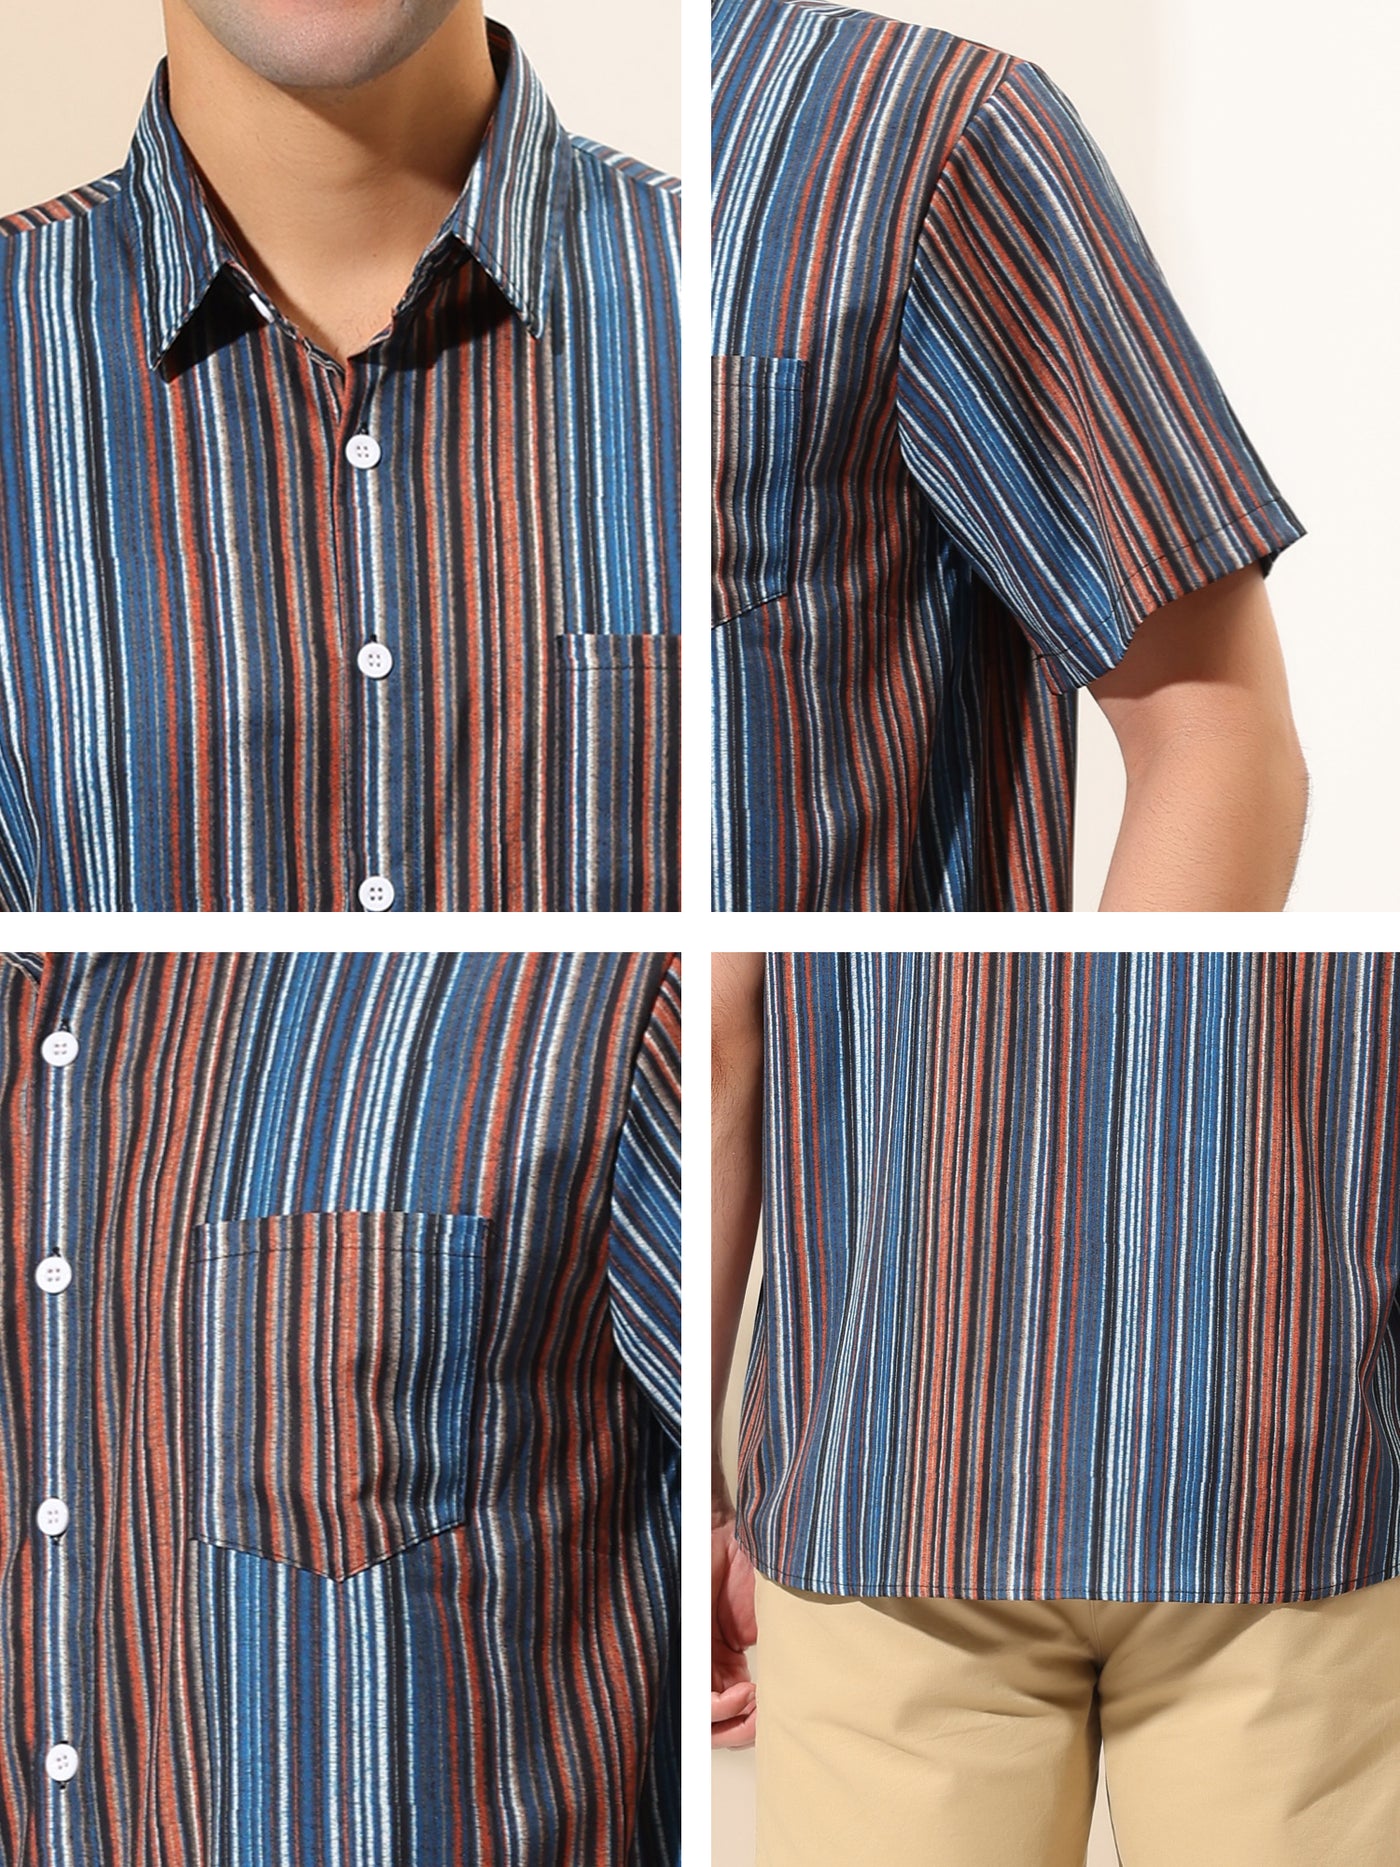 Bublédon Summer Hawaiian Striped Printed Short Sleeve Shirts